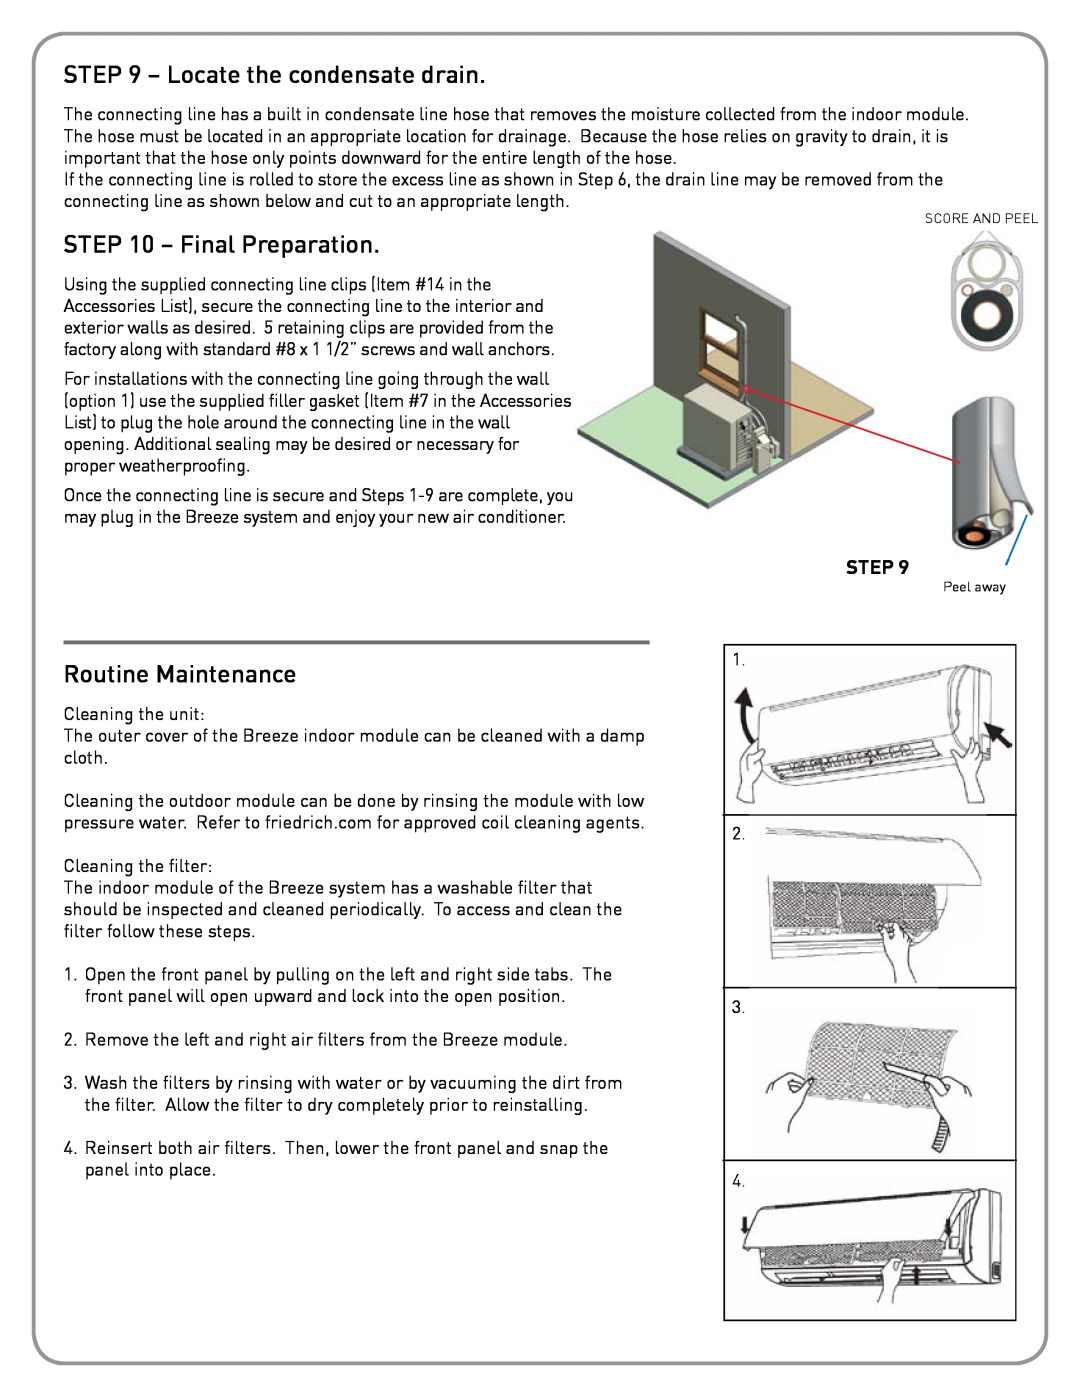 Friedrich BR1224W3A installation instructions Locate the condensate drain, Final Preparation, Routine Maintenance, Step 